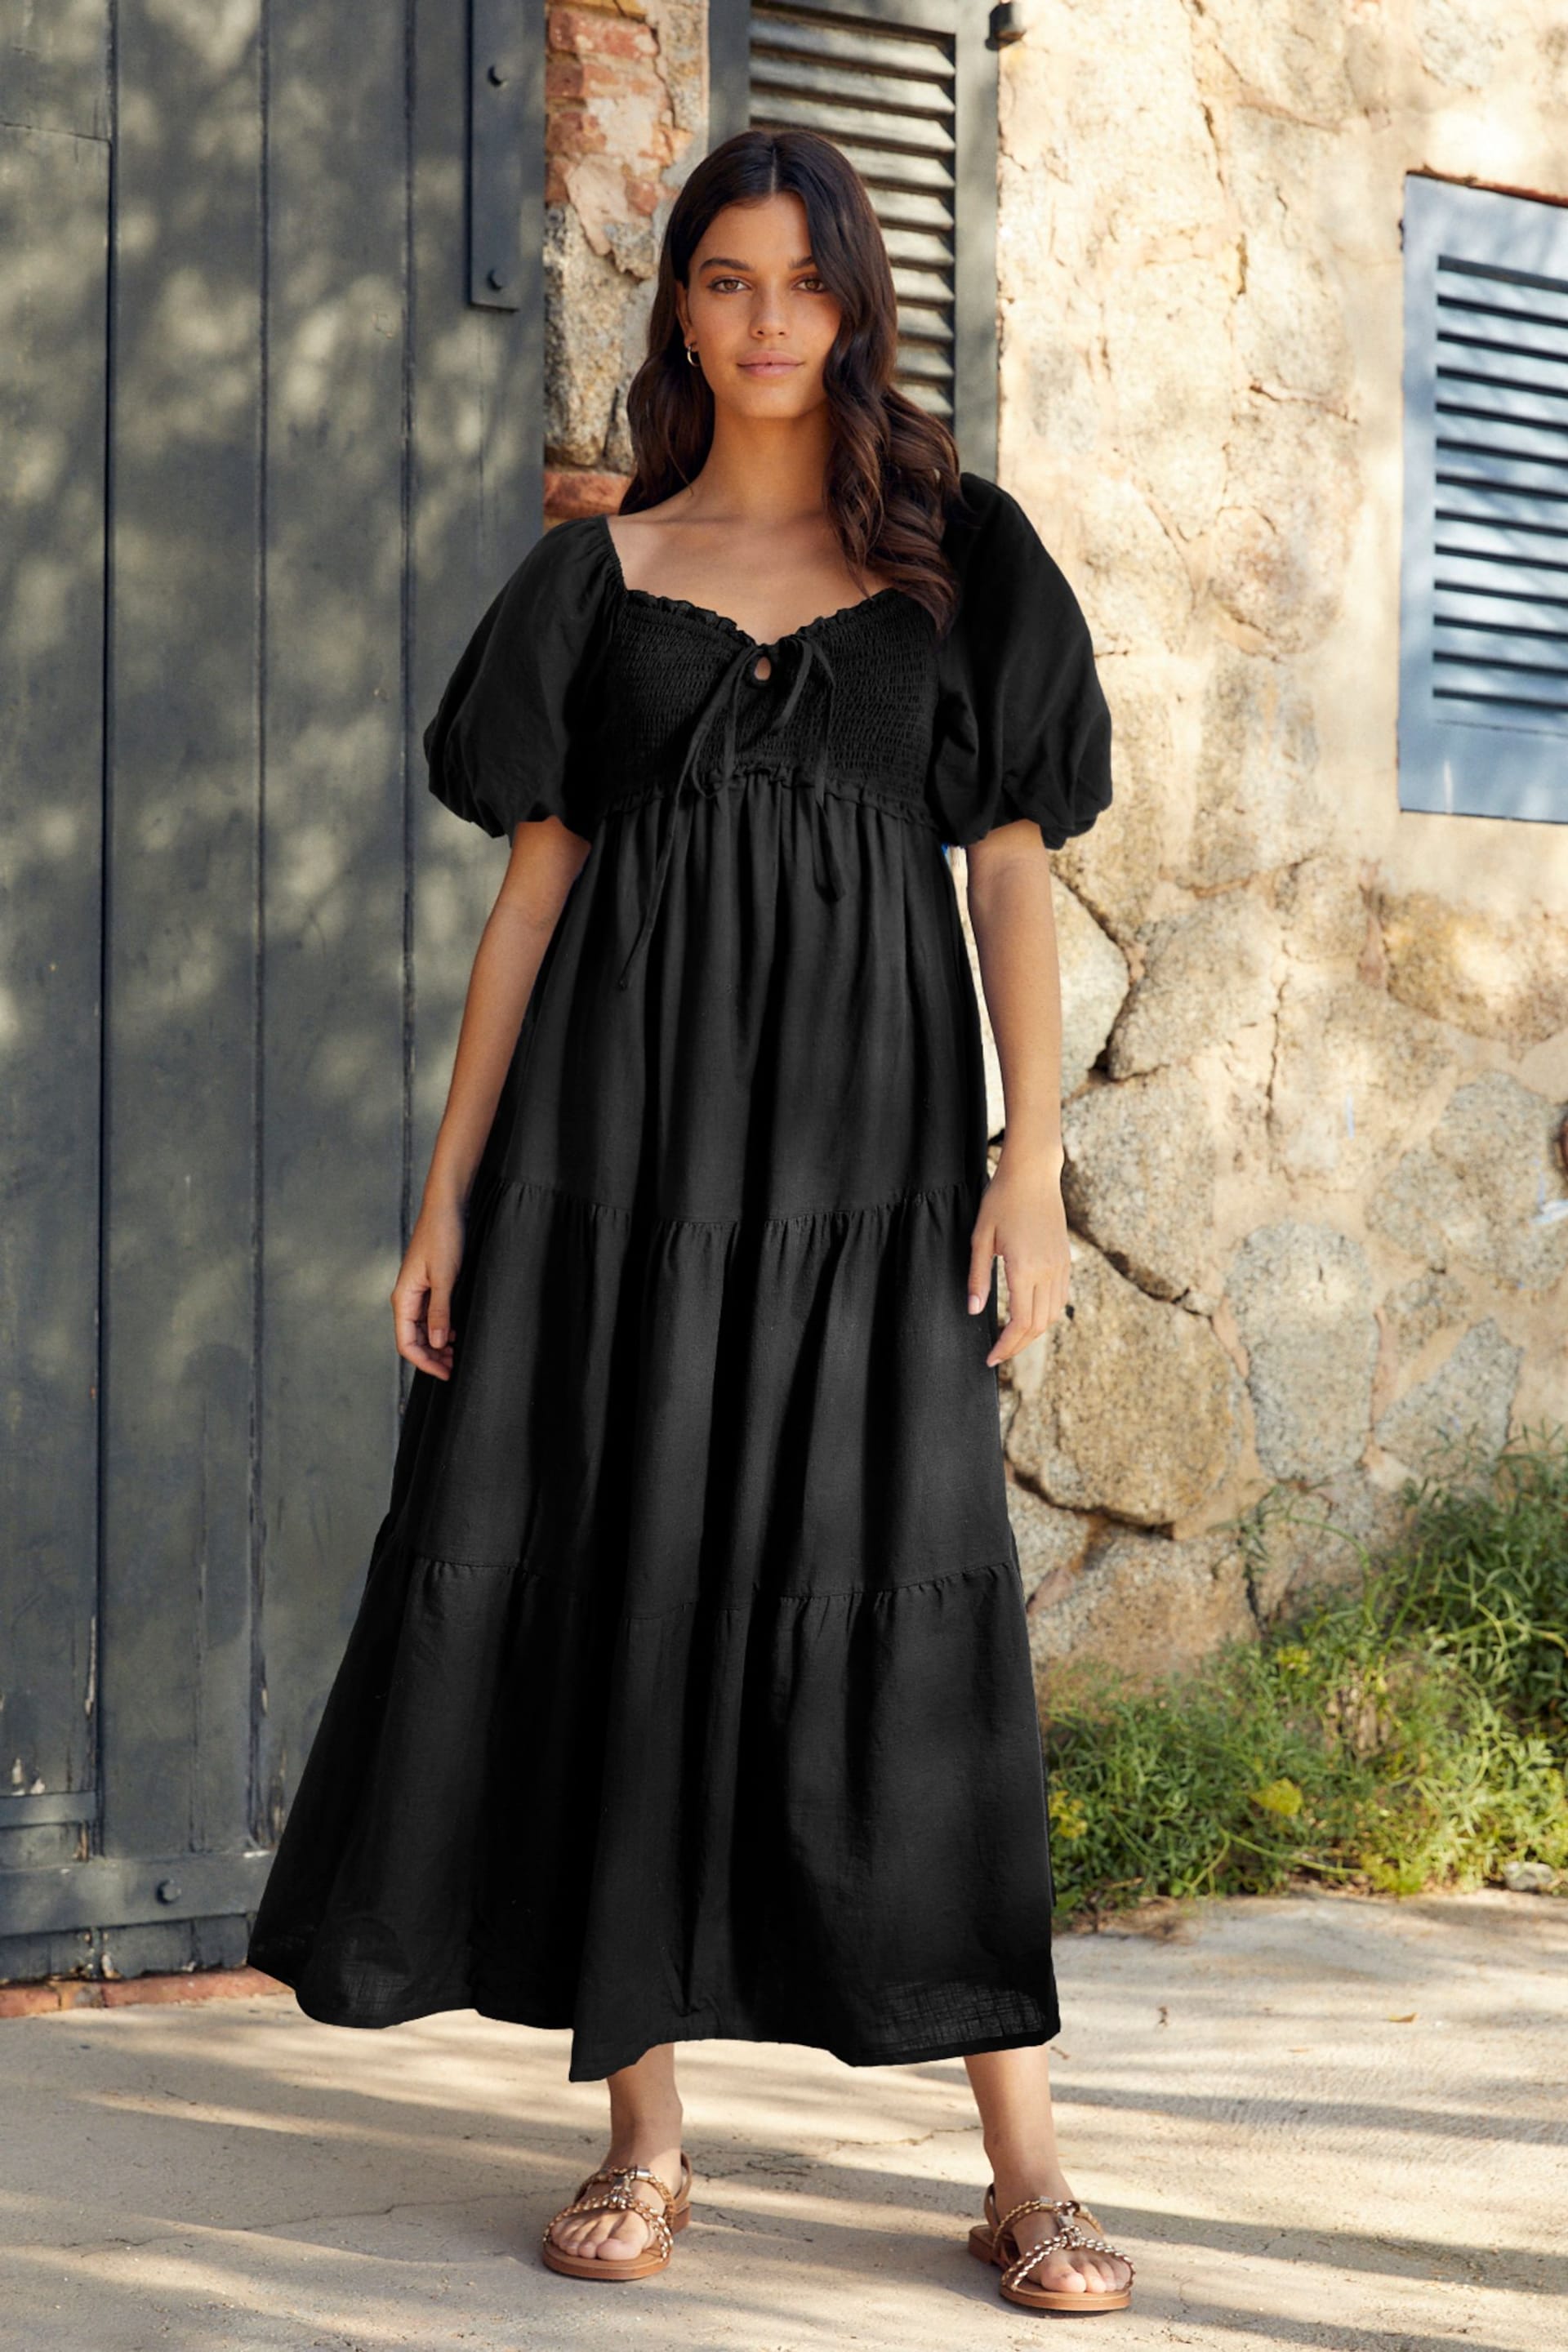 Black Puff Sleeve Maxi Dress - Image 1 of 6